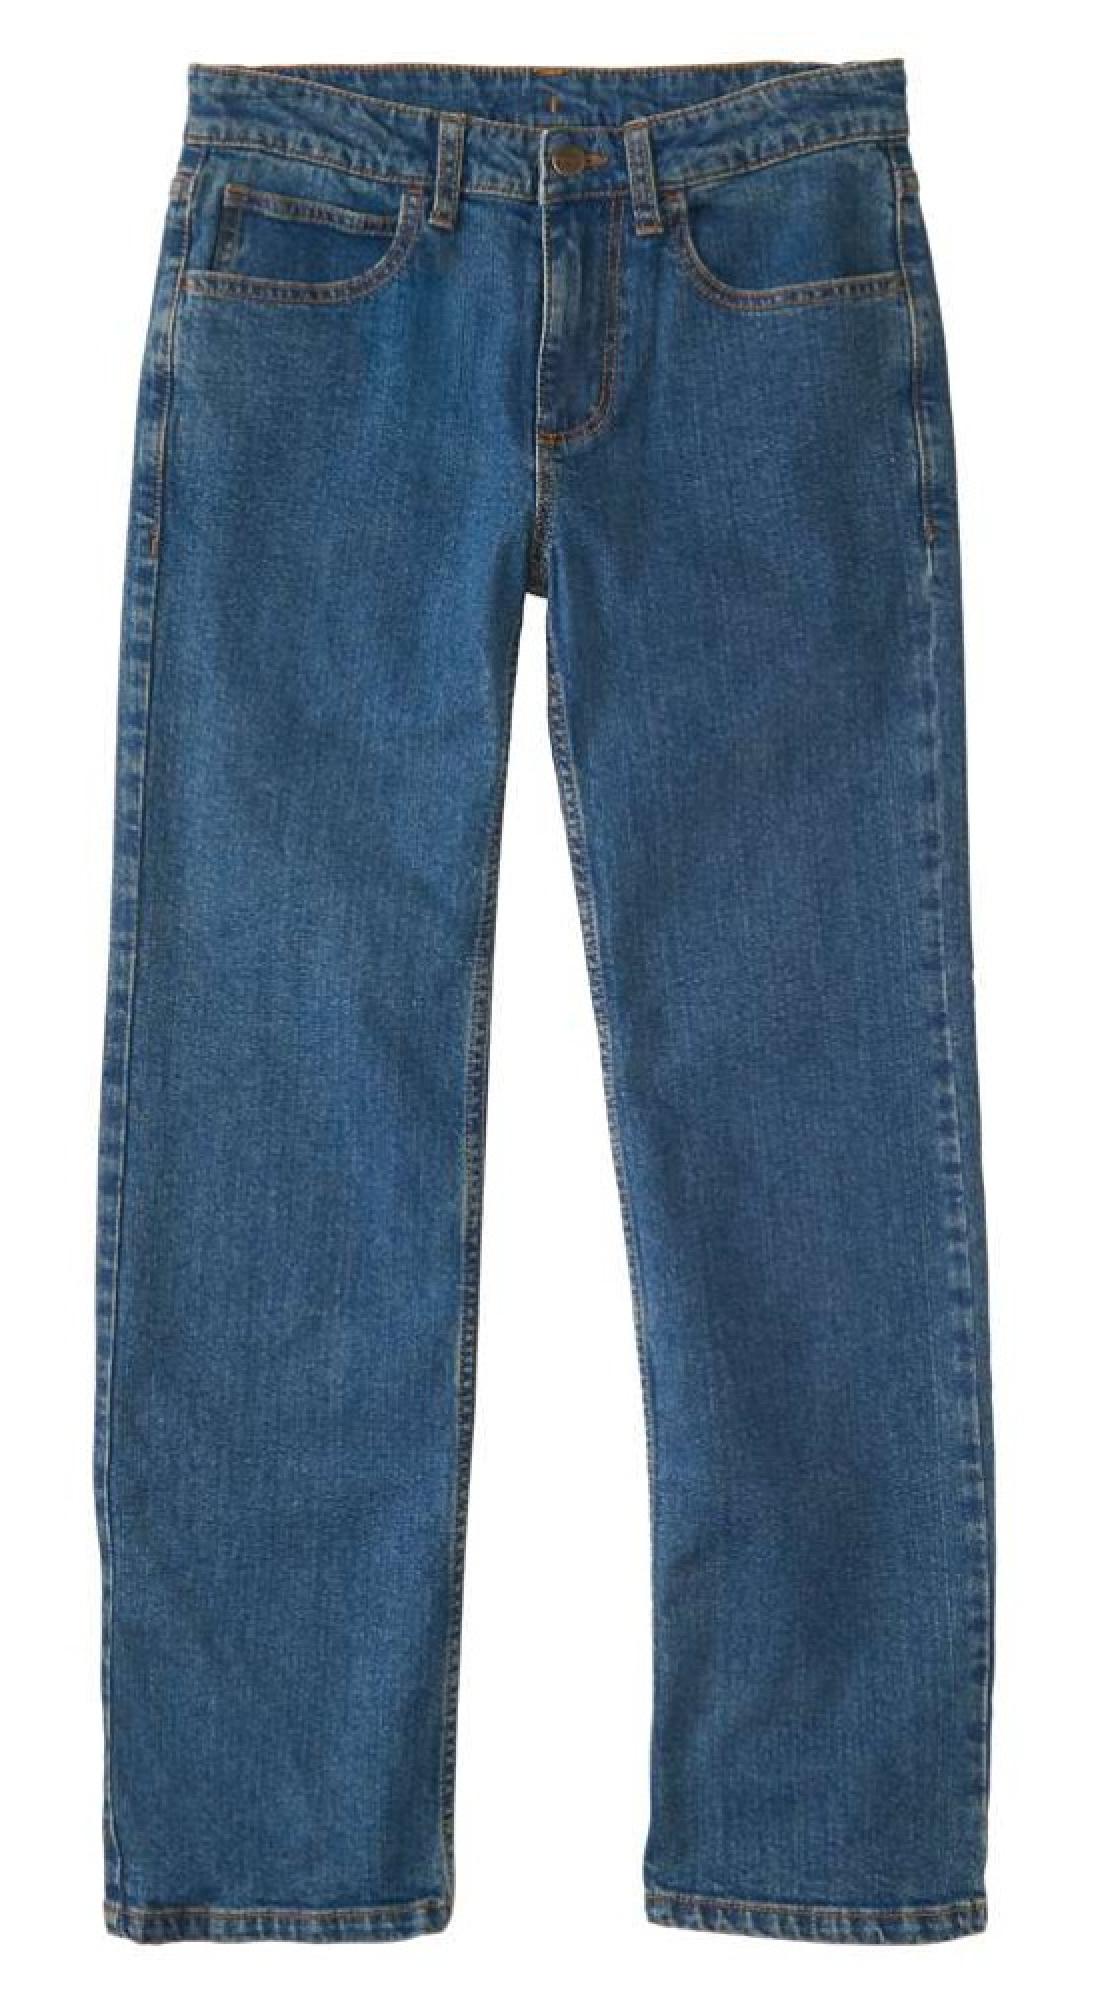 Carhartt Boy's Denim 5-Pocket Jean